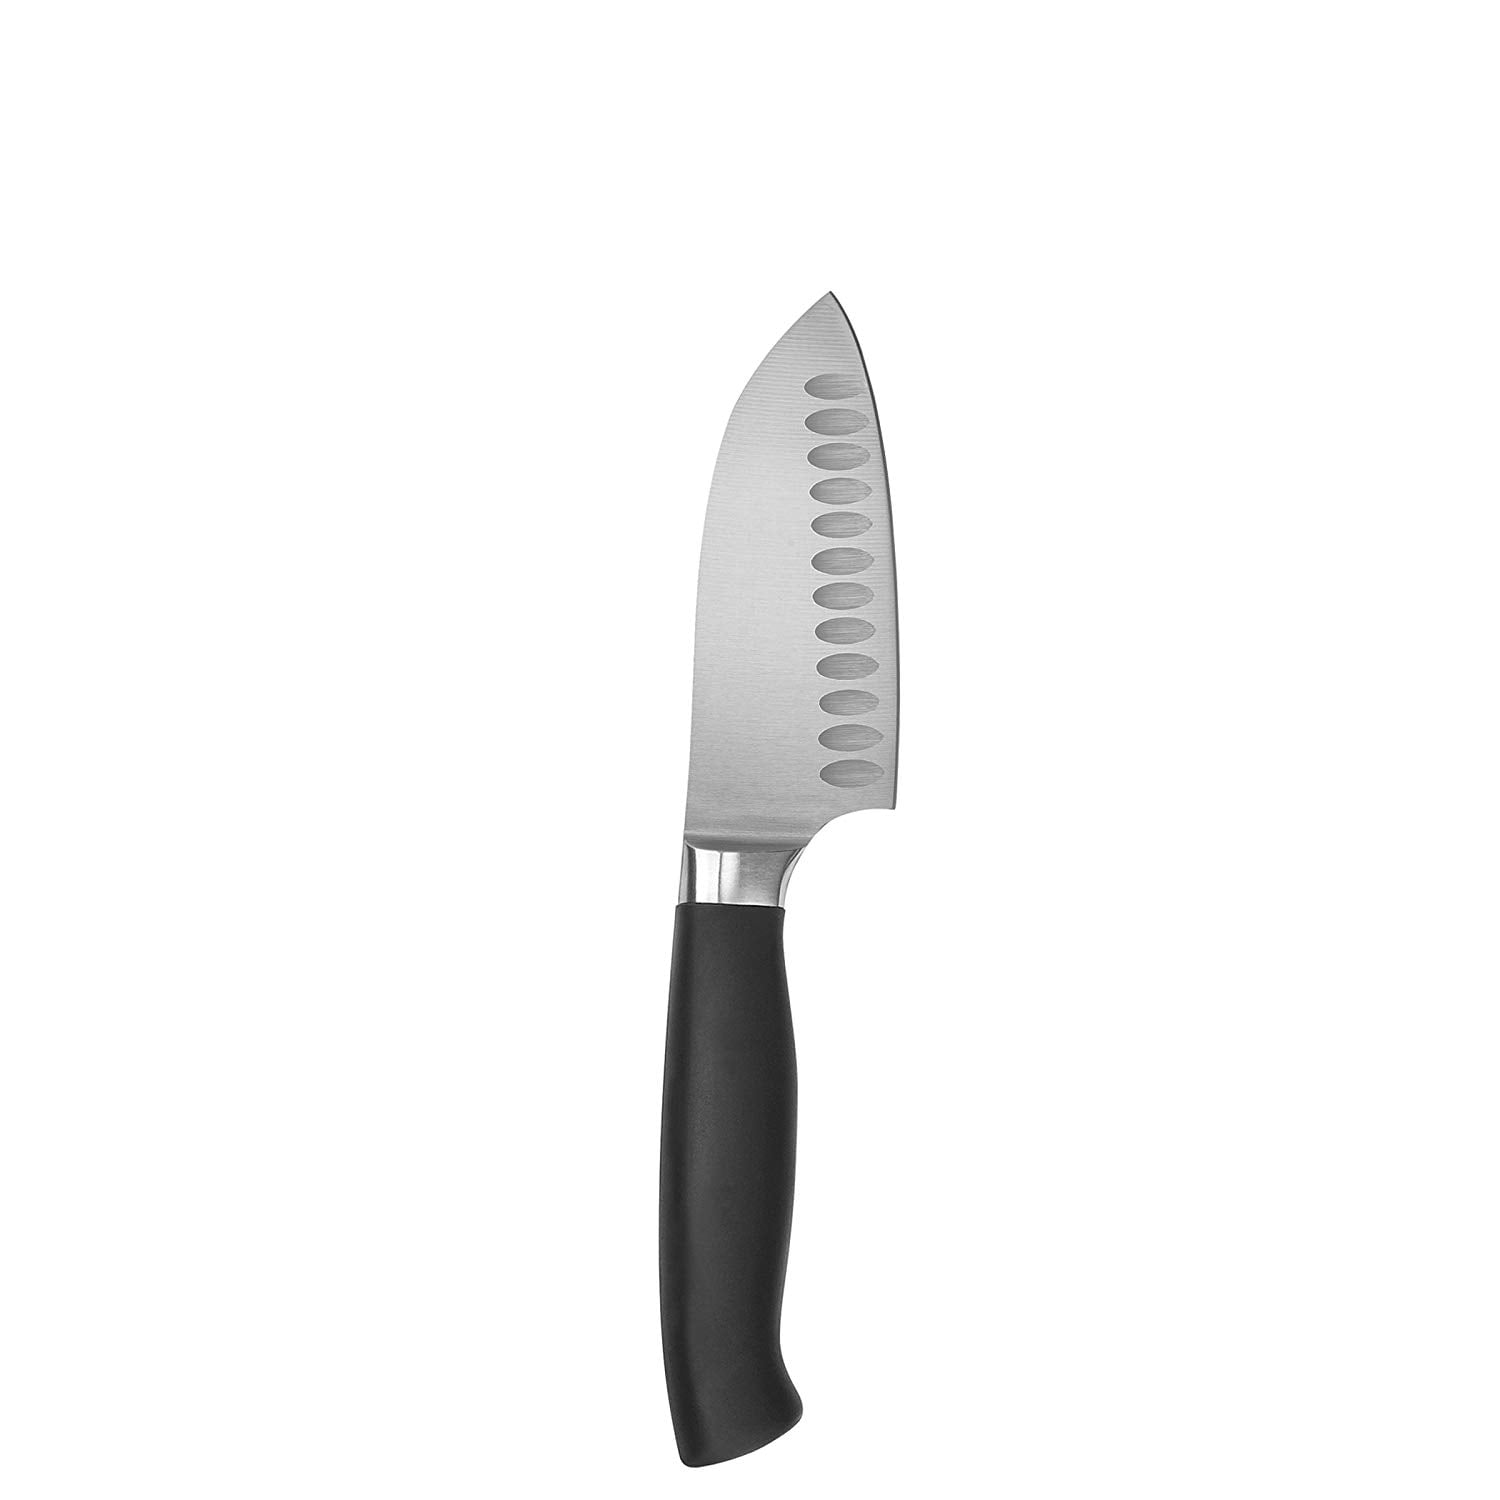 OXO Good Grips MV55-Pro 7-Piece Steak Knife Set with Maple Block